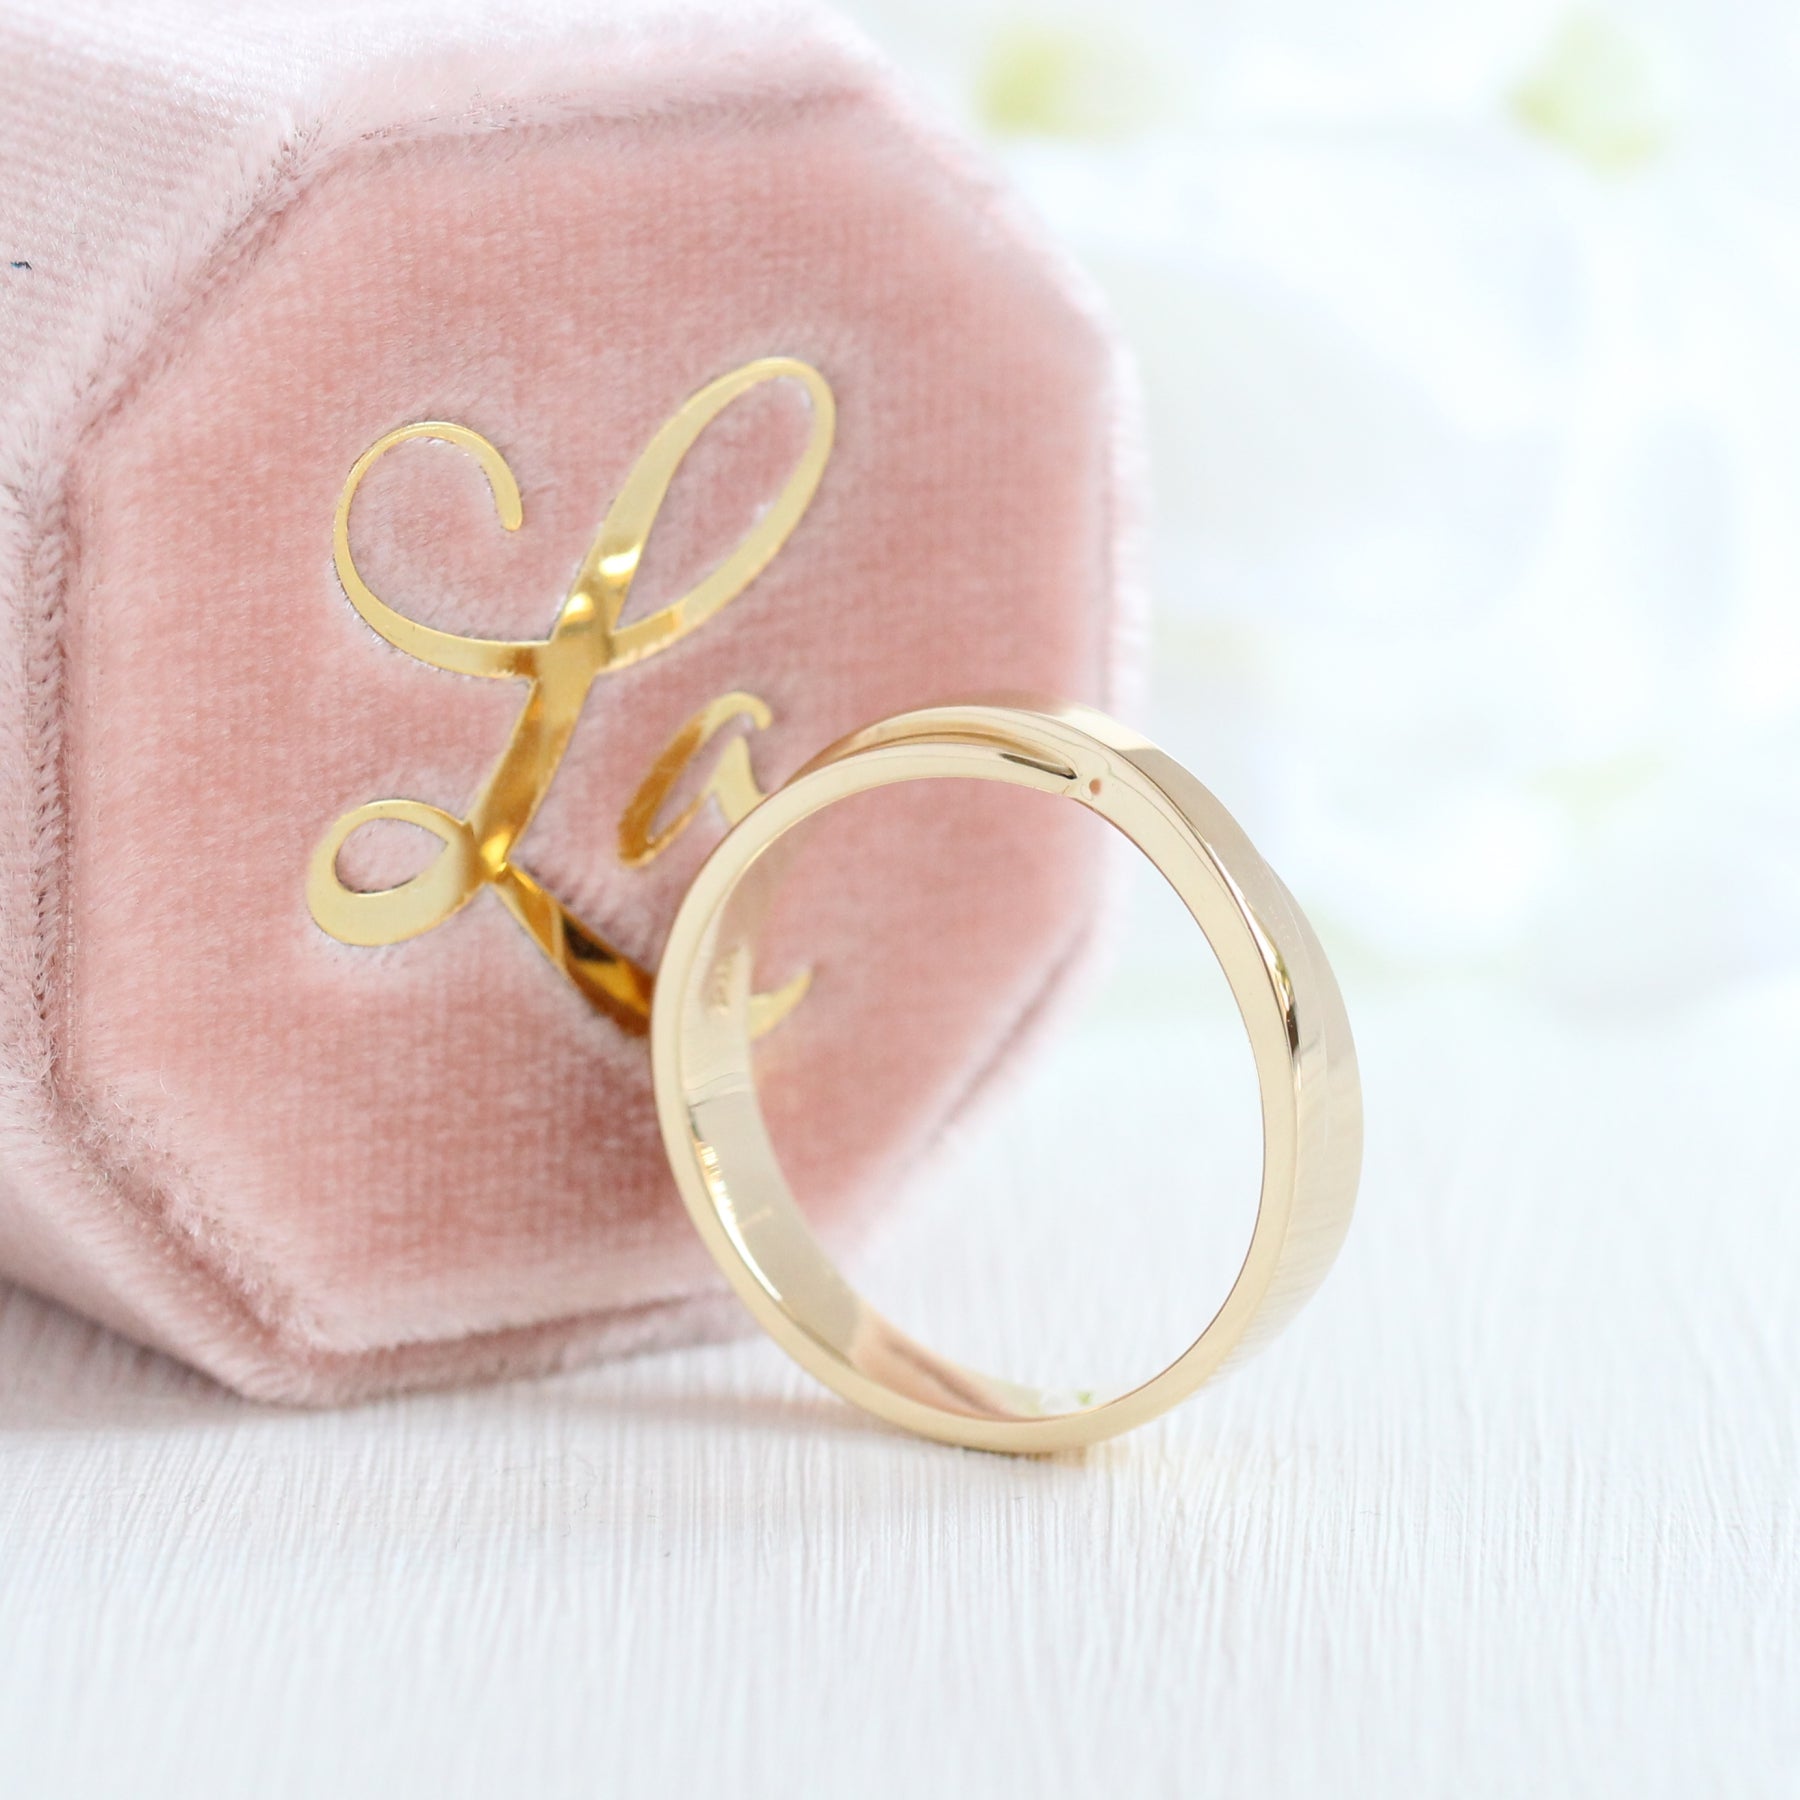 infinity knot wedding band yellow gold wedding ring la more design jewelry